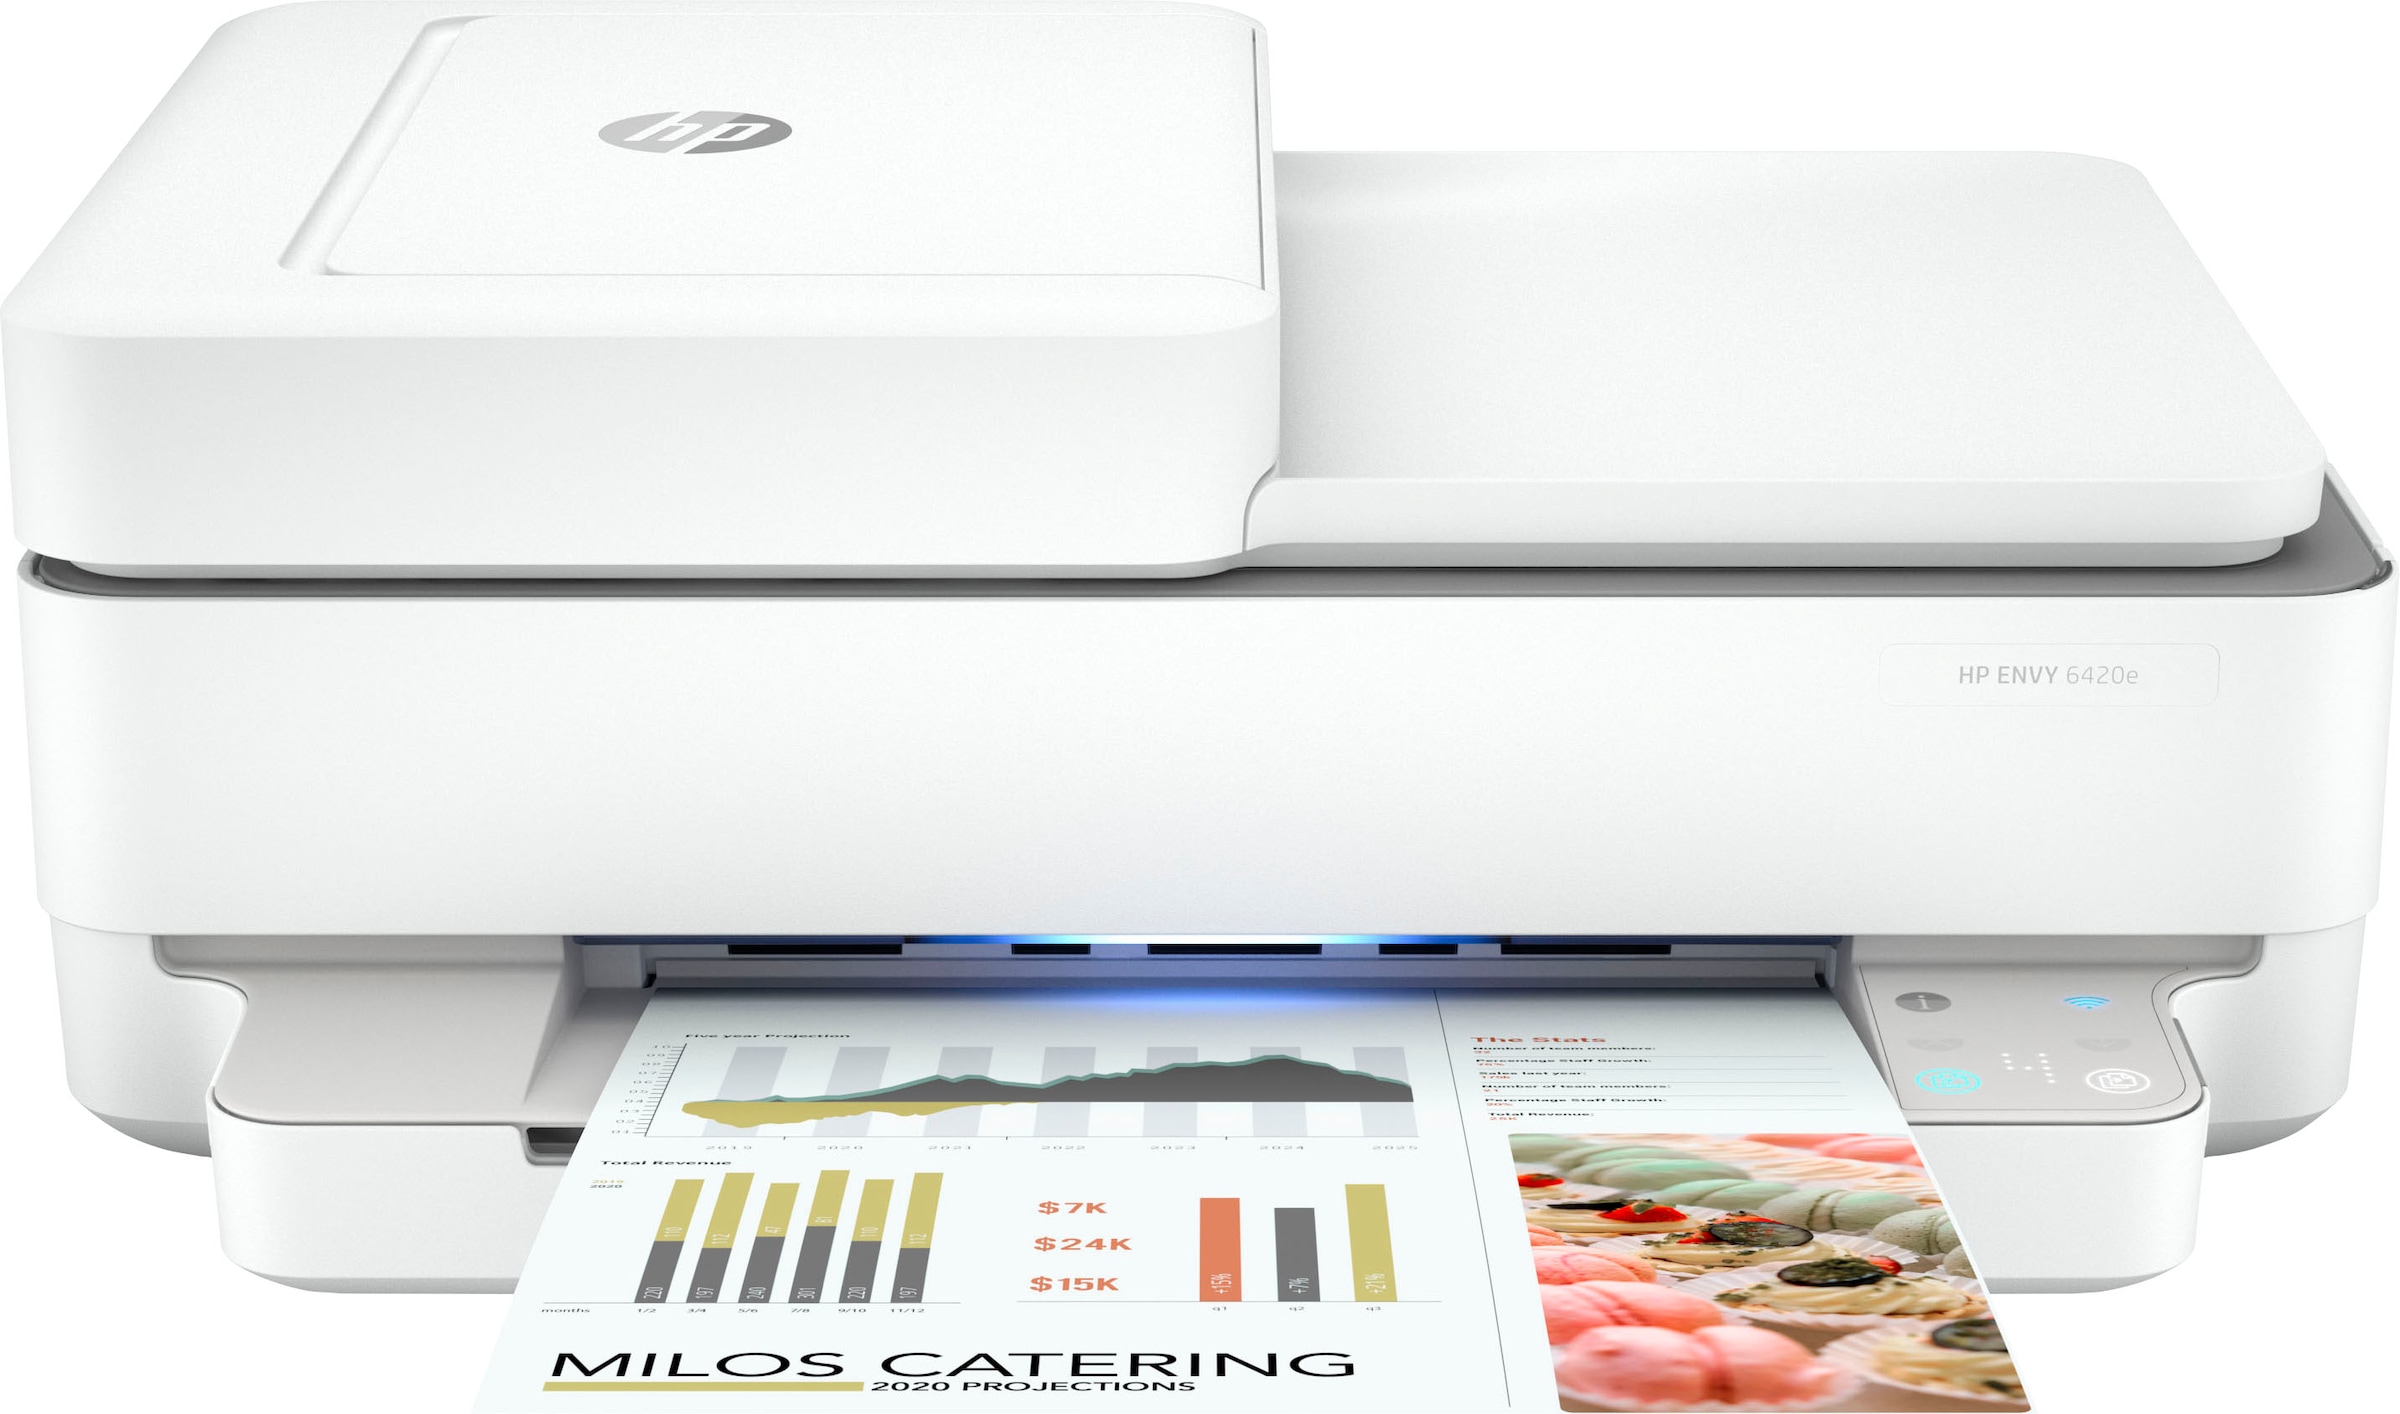 HP Multifunktionsdrucker »ENVY 6420e«, 3 Monate gratis Drucken mit HP Instant Ink inklusive